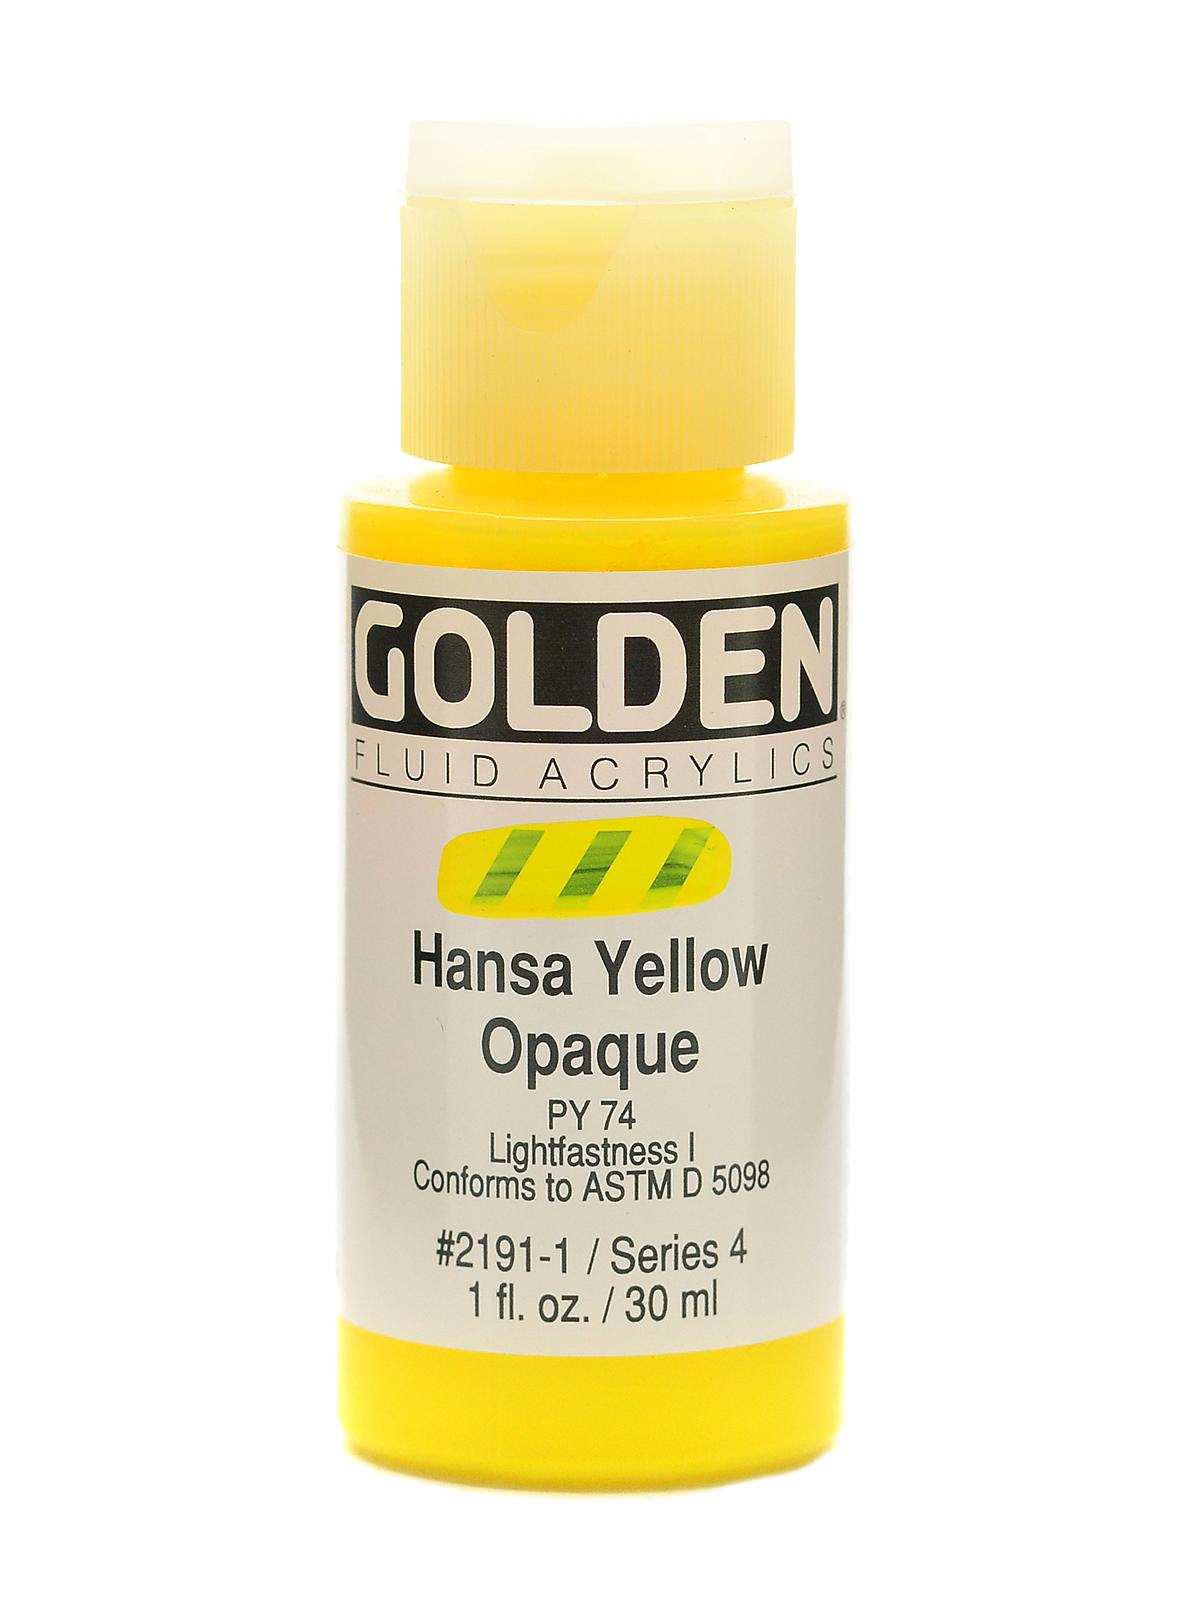 Fluid Acrylics hansa yellow opaque 1 oz.